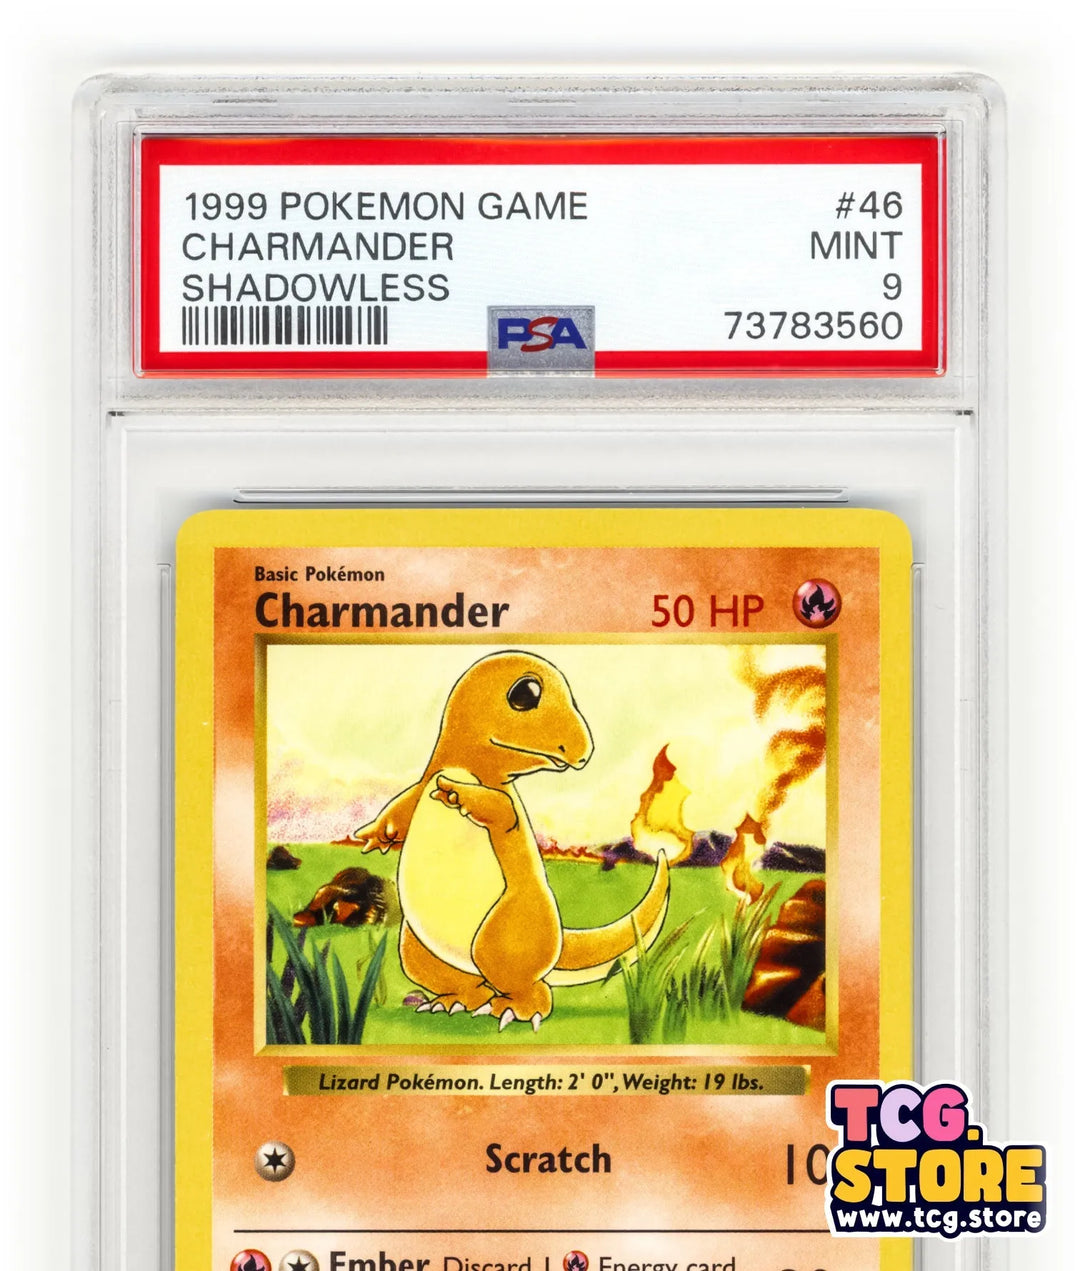 Pokémon Game 1999 Charmander - Shadowless - Base Set - PSA 9 MINT - TCG.Store